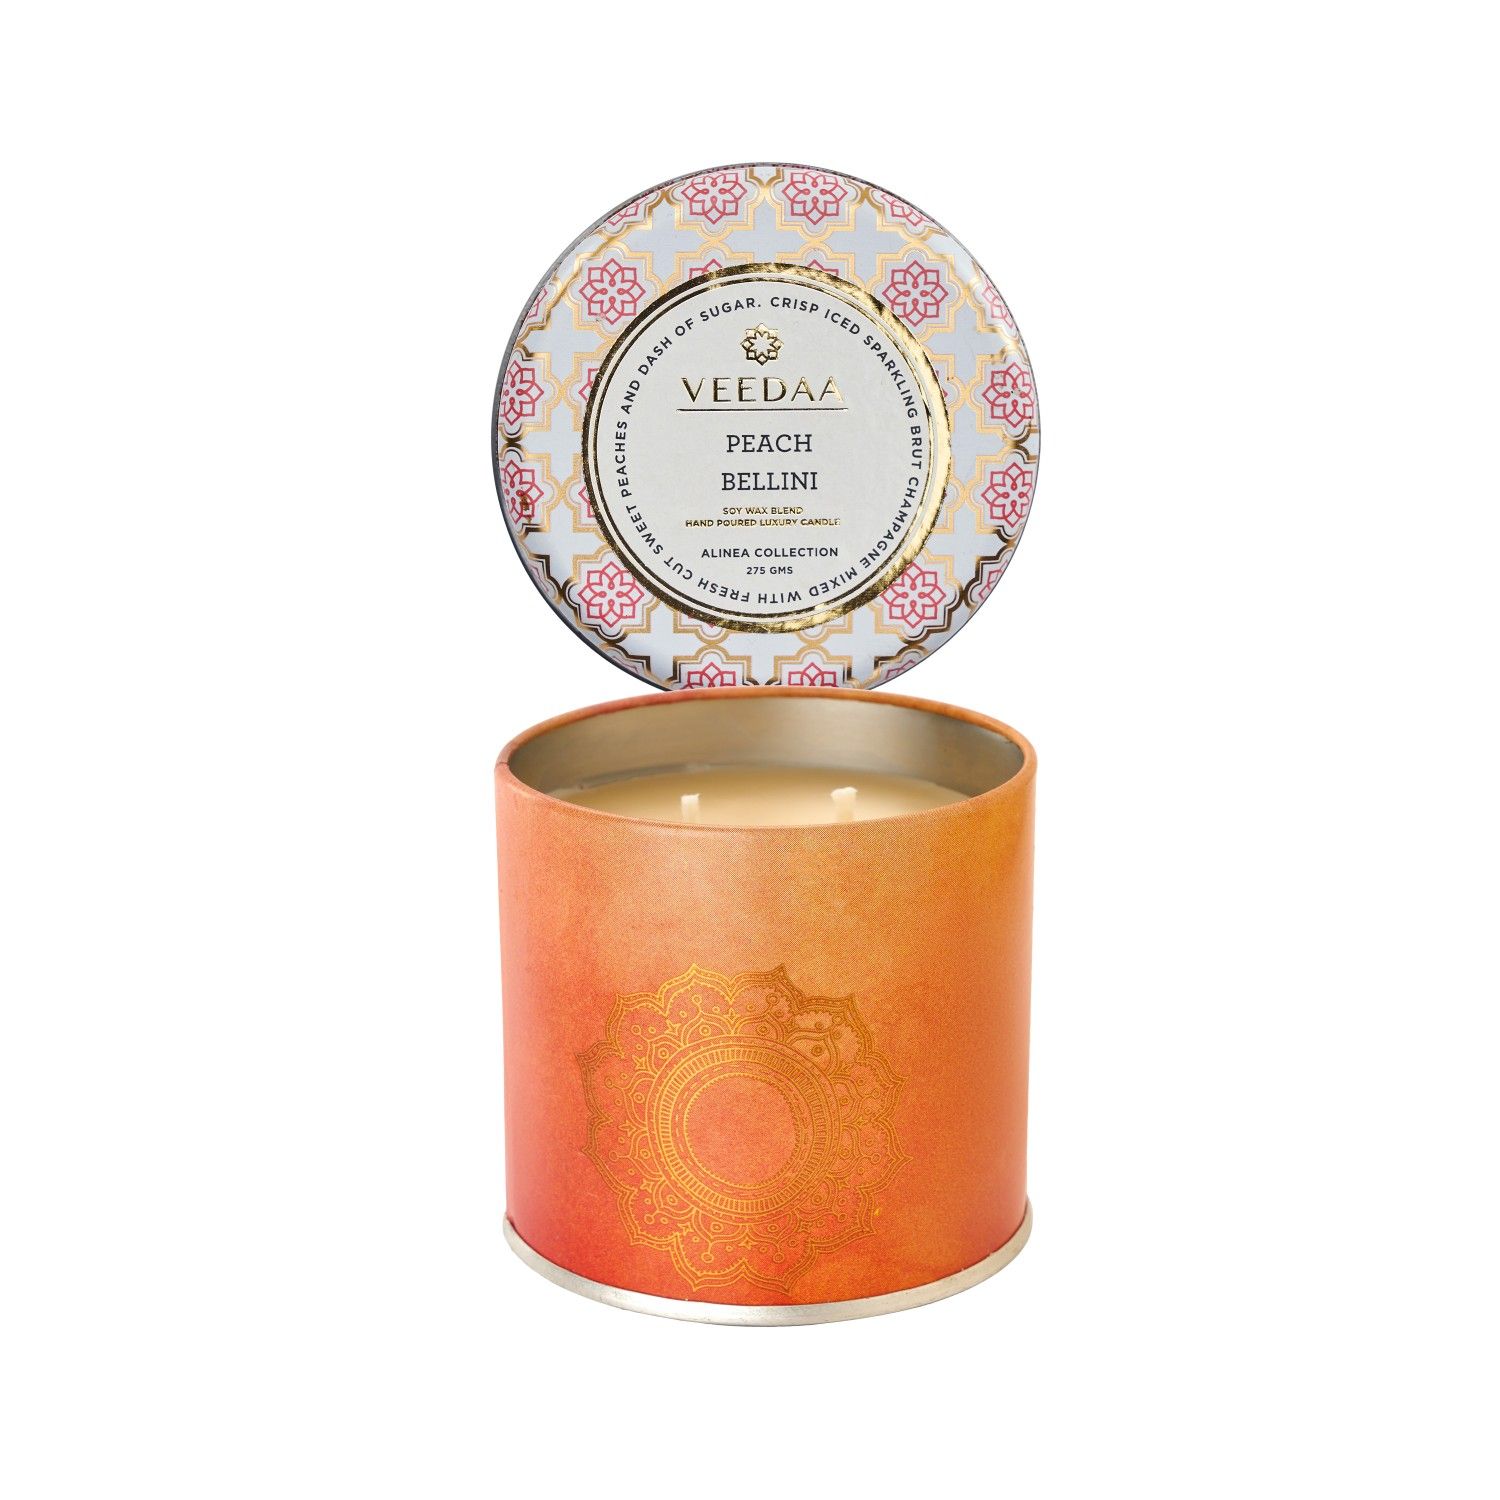 Veedaa Peach Bellini Mason Tin Scented Candle